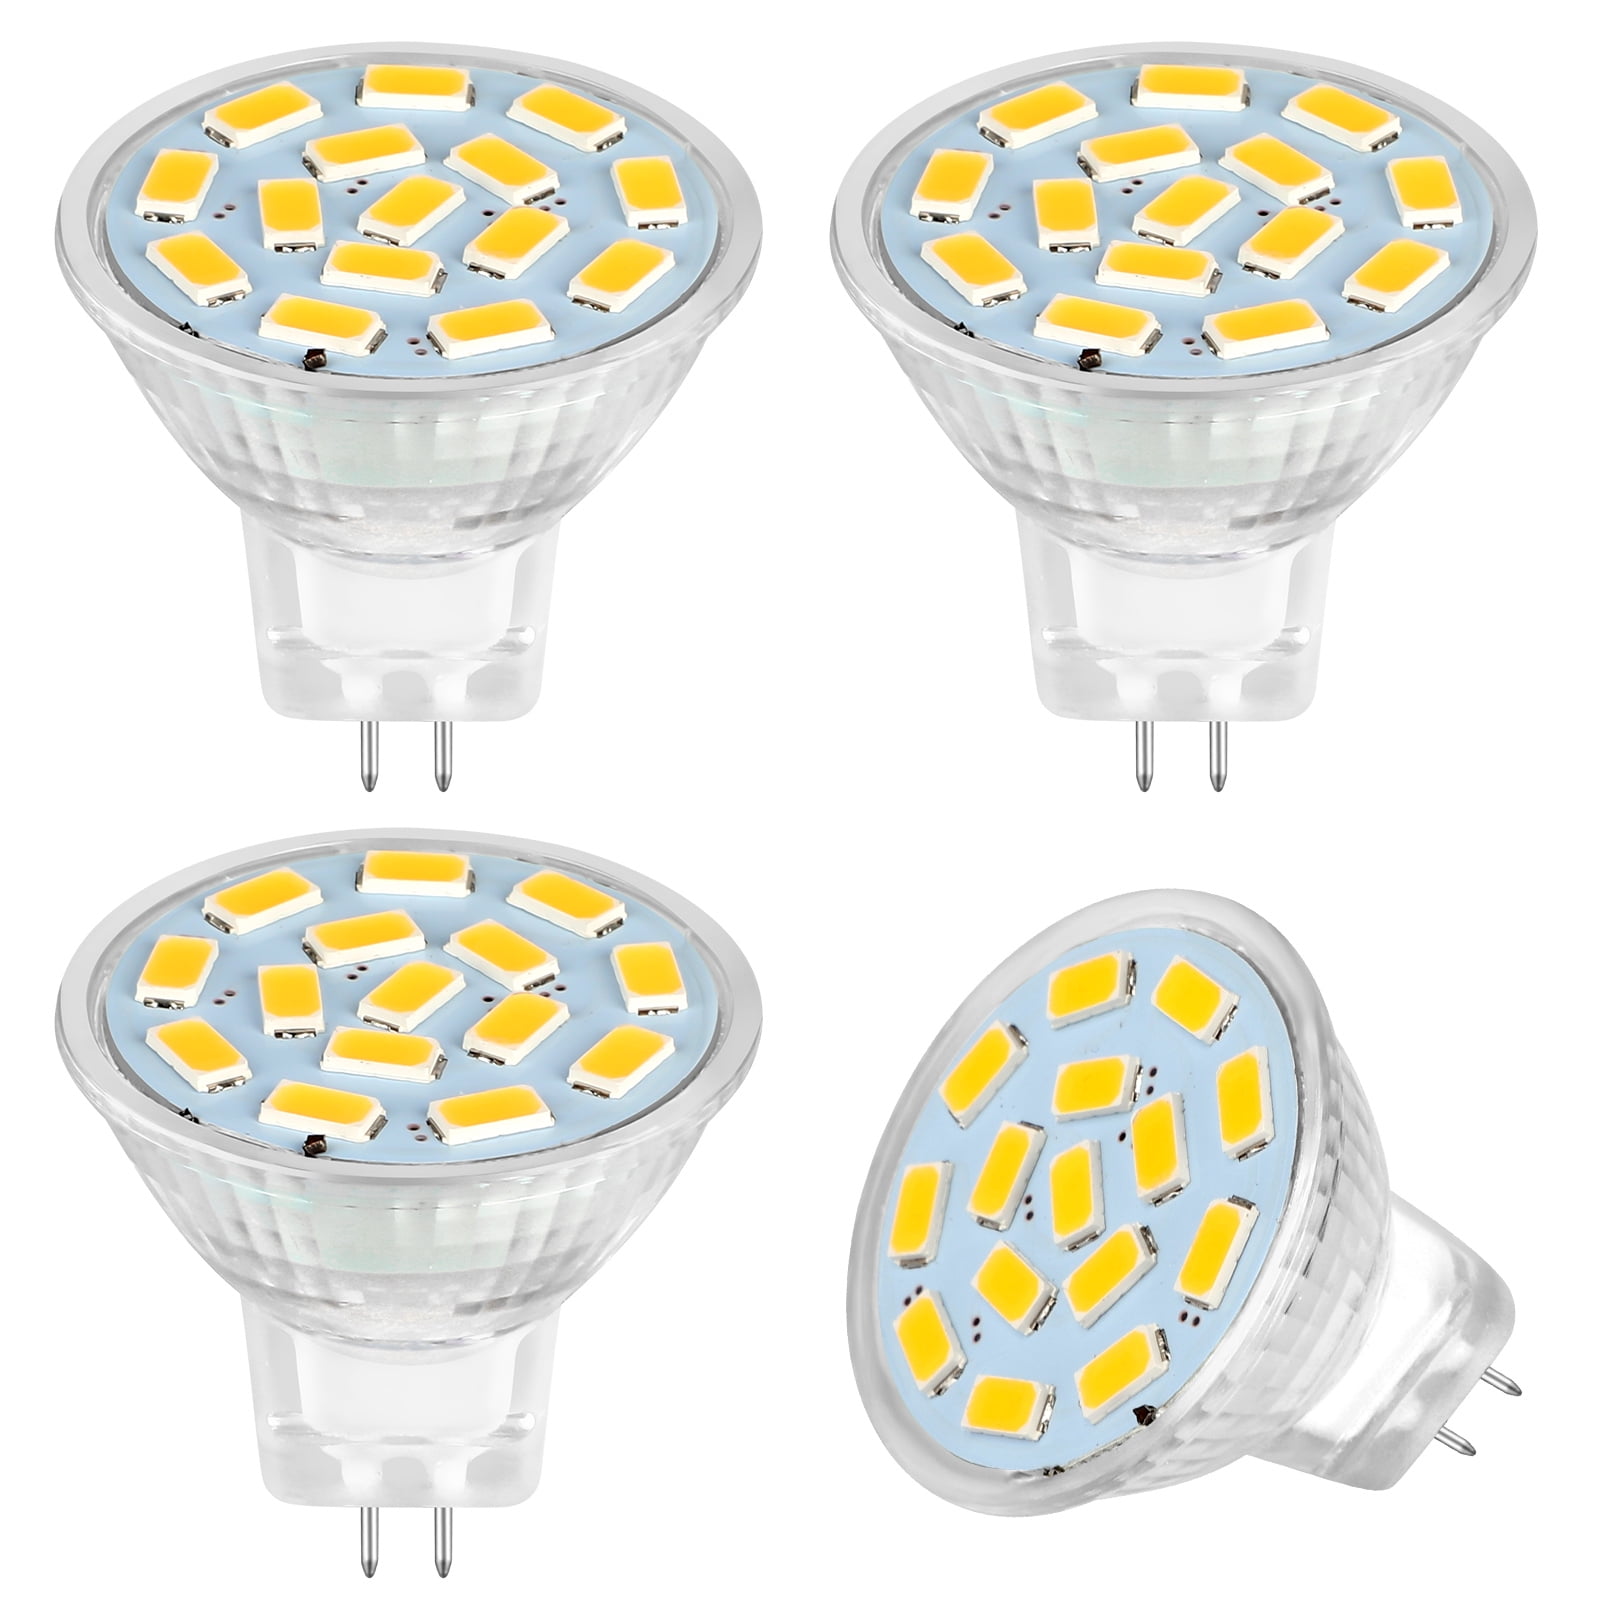 4pcs LED MR11 Light Bulbs, EEEkit 3W 12V LED MR11 Flood Light Bulbs to 20W Halogen Bulbs, GU4 Bi-Pin Base for Landscape Accent Lighting, Soft White - Walmart.com